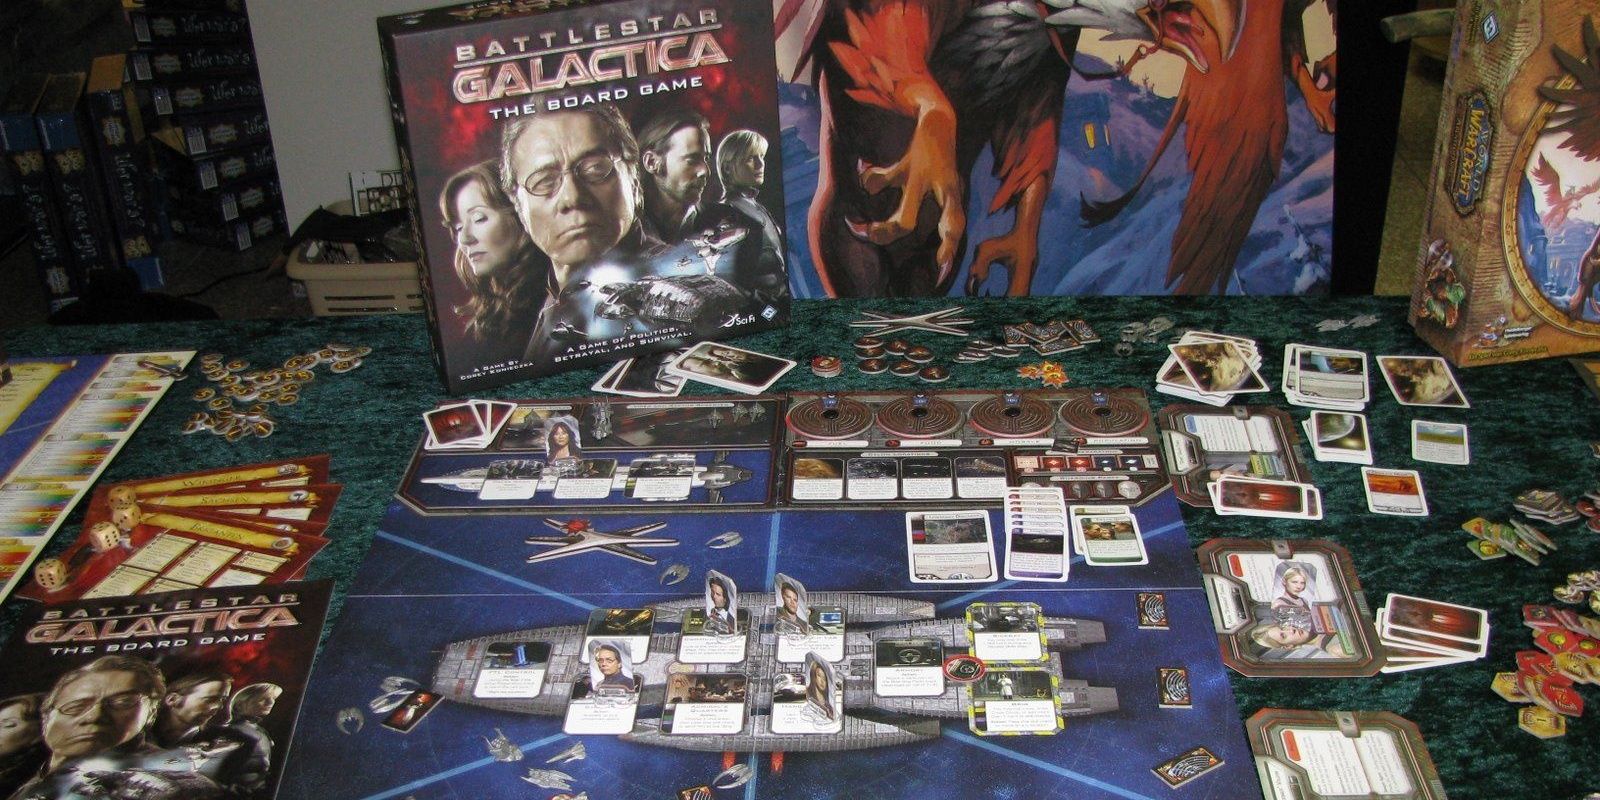 battlestar galactica setup 